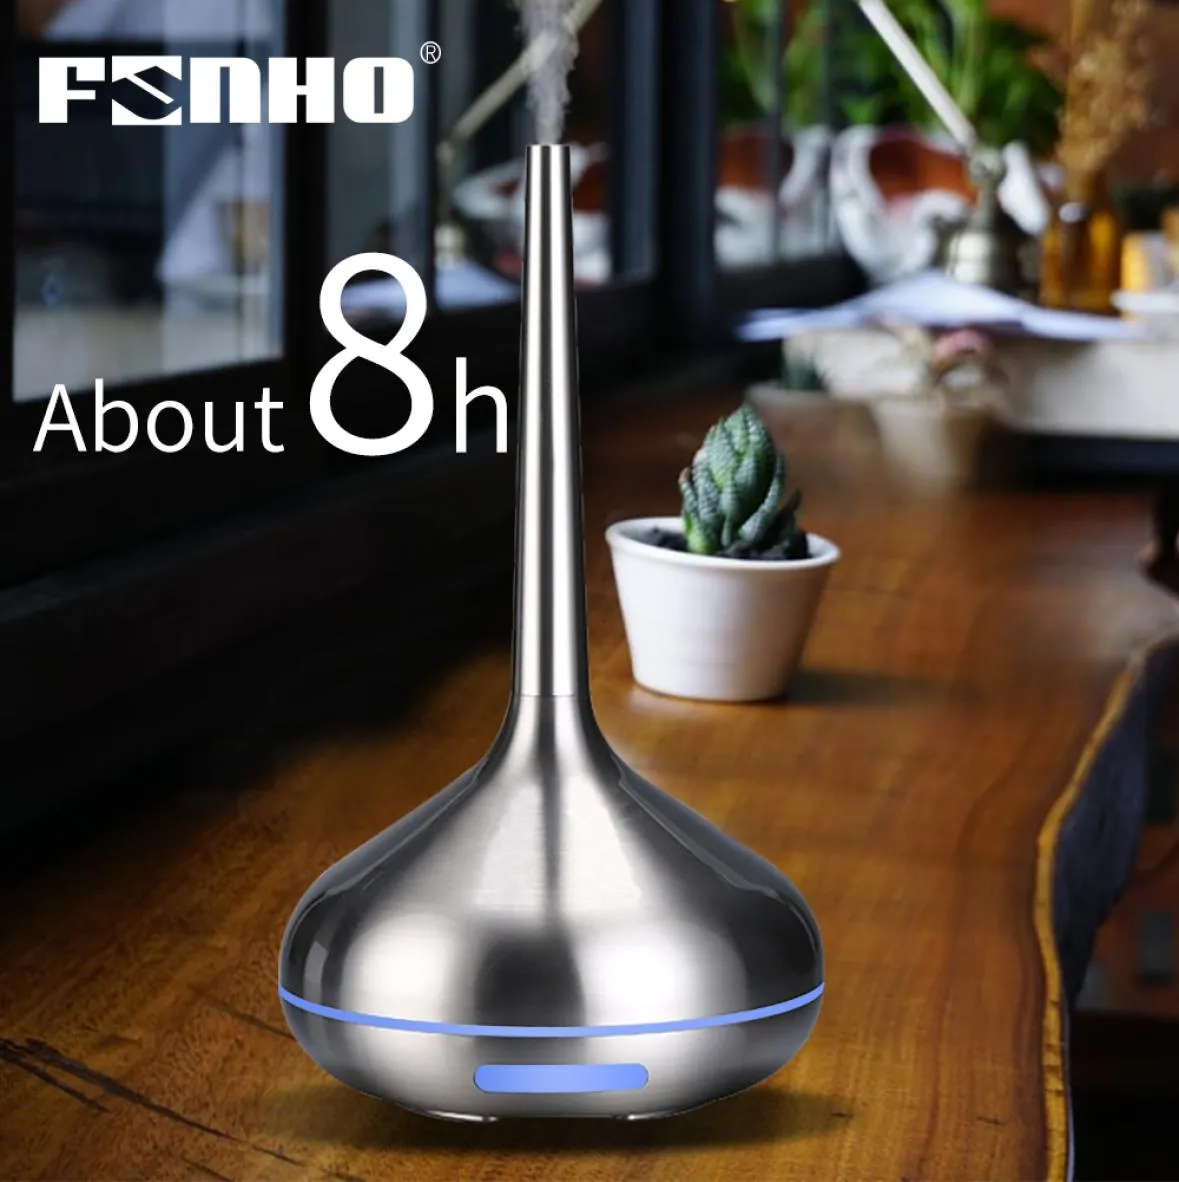 FUNHO FUMIDIFIER Ultrasonic Air Arom Diffuser Purifier Aromaterapi Essential Oil Mist Maker With Night LED Light Lamp för Hem Y3445355